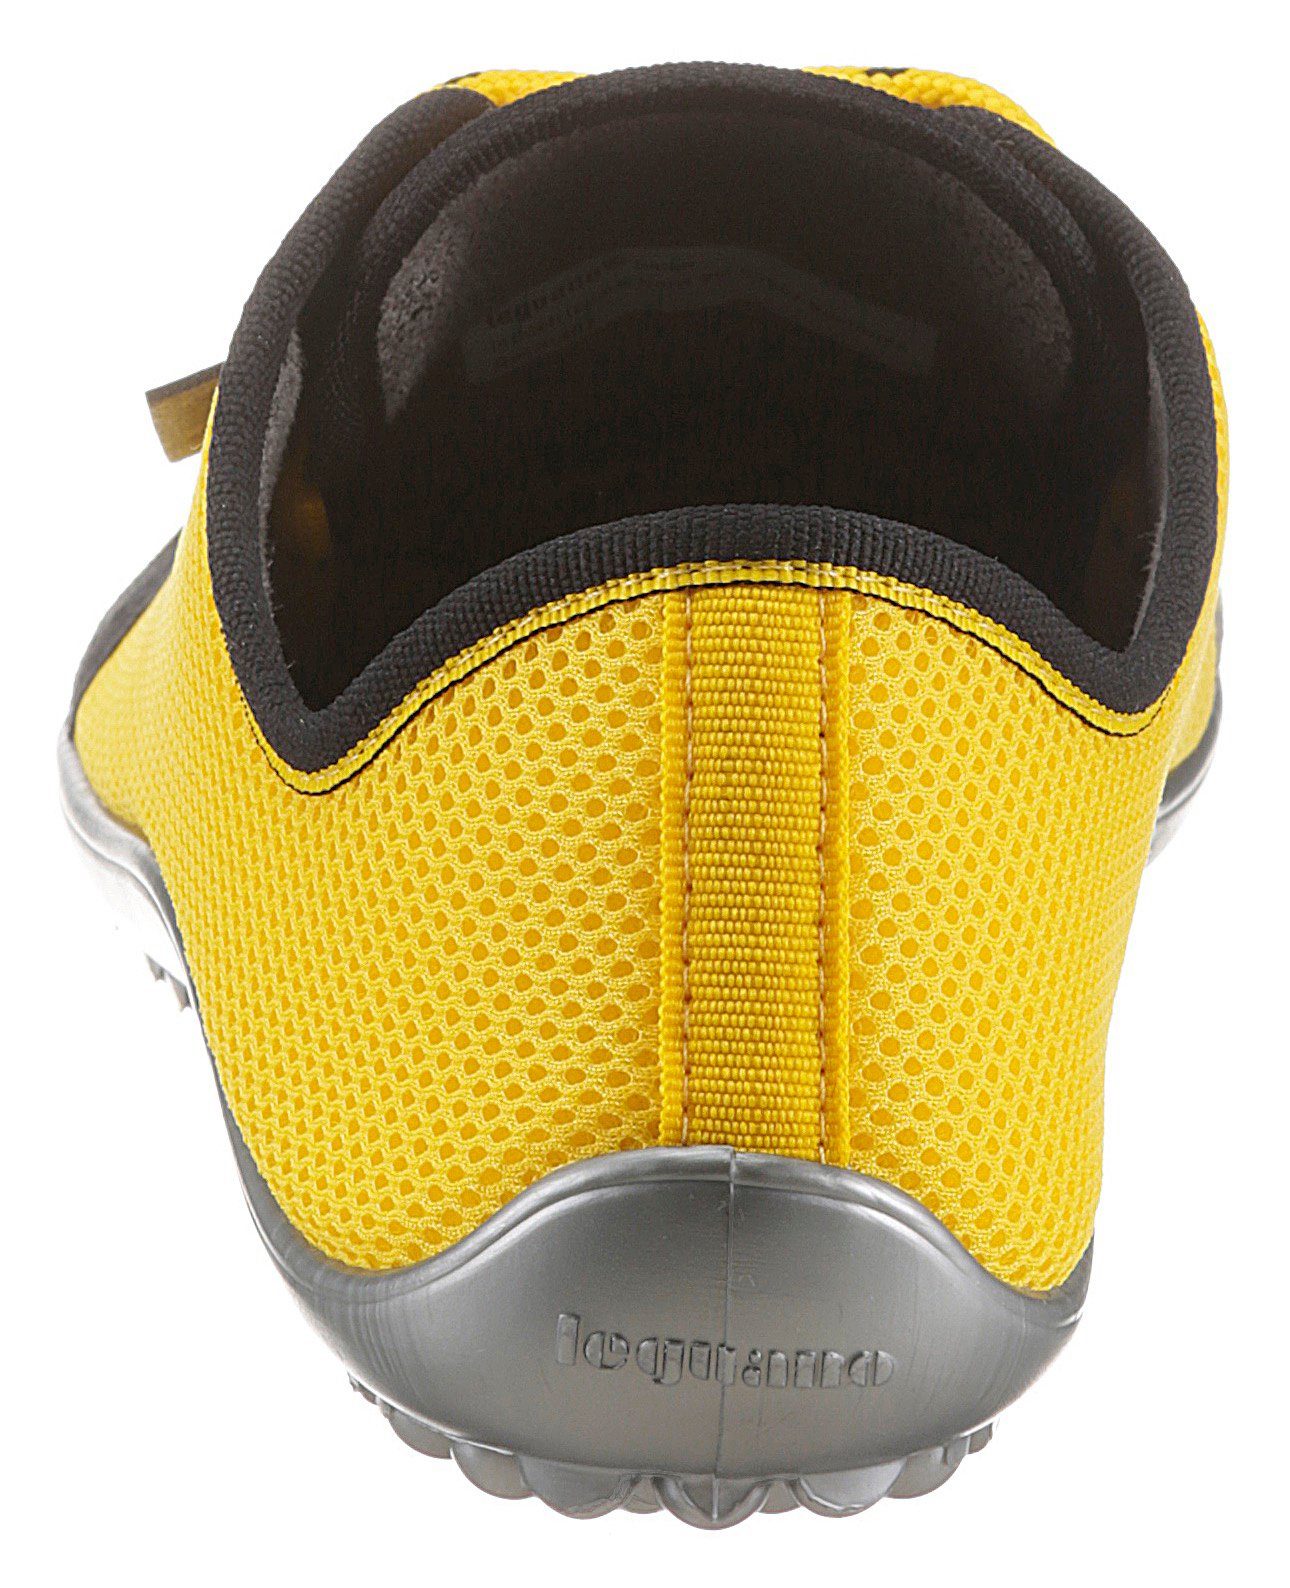 gelb ergonomischer Barfußschuh Leguano AKTIV Formgebung mit